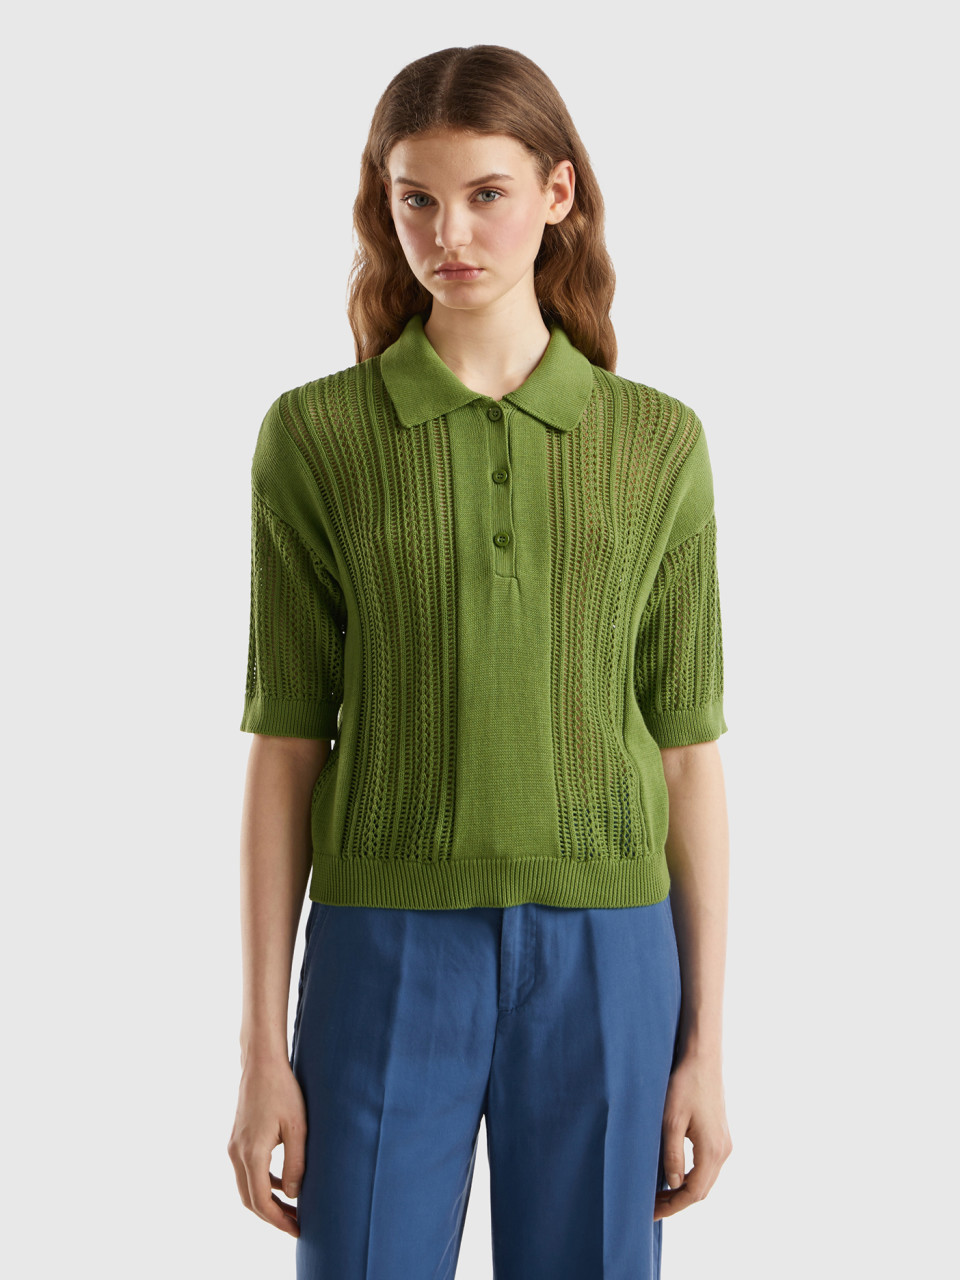 Benetton, Crochet Knit Polo Shirt, Military Green, Women